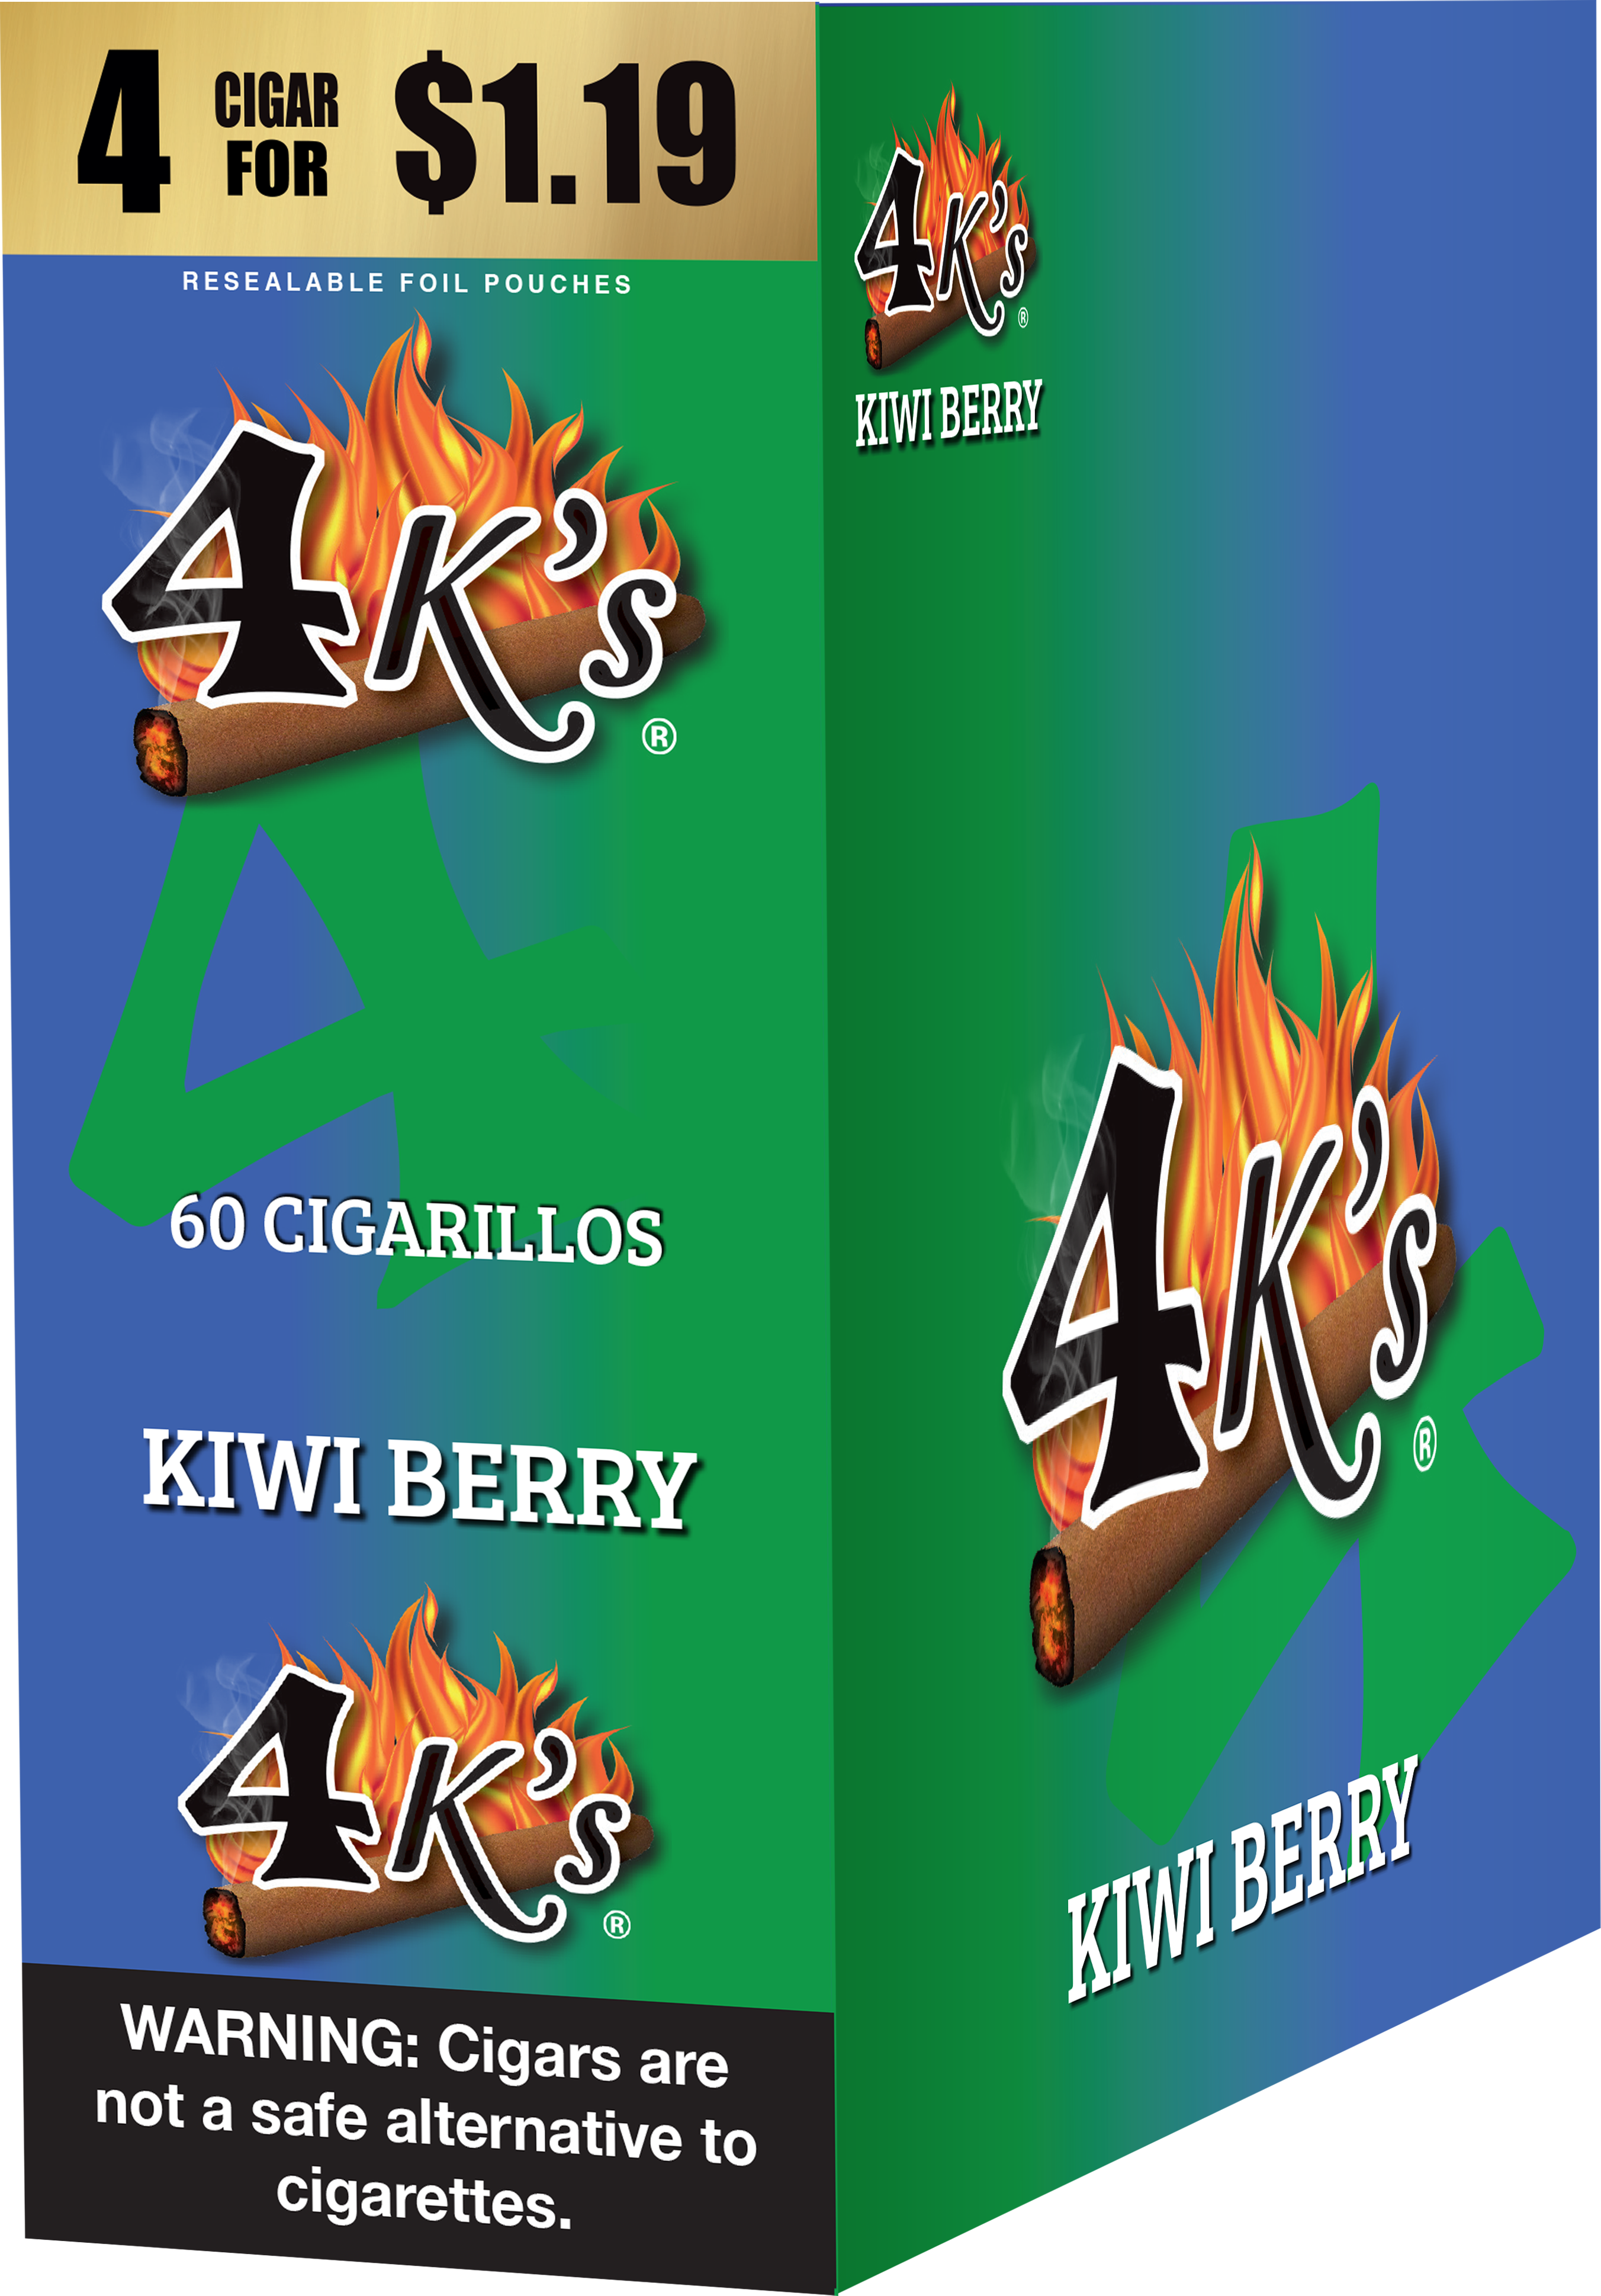 4kings kiwi berry 4/$1.19 f.p. 15/4pk